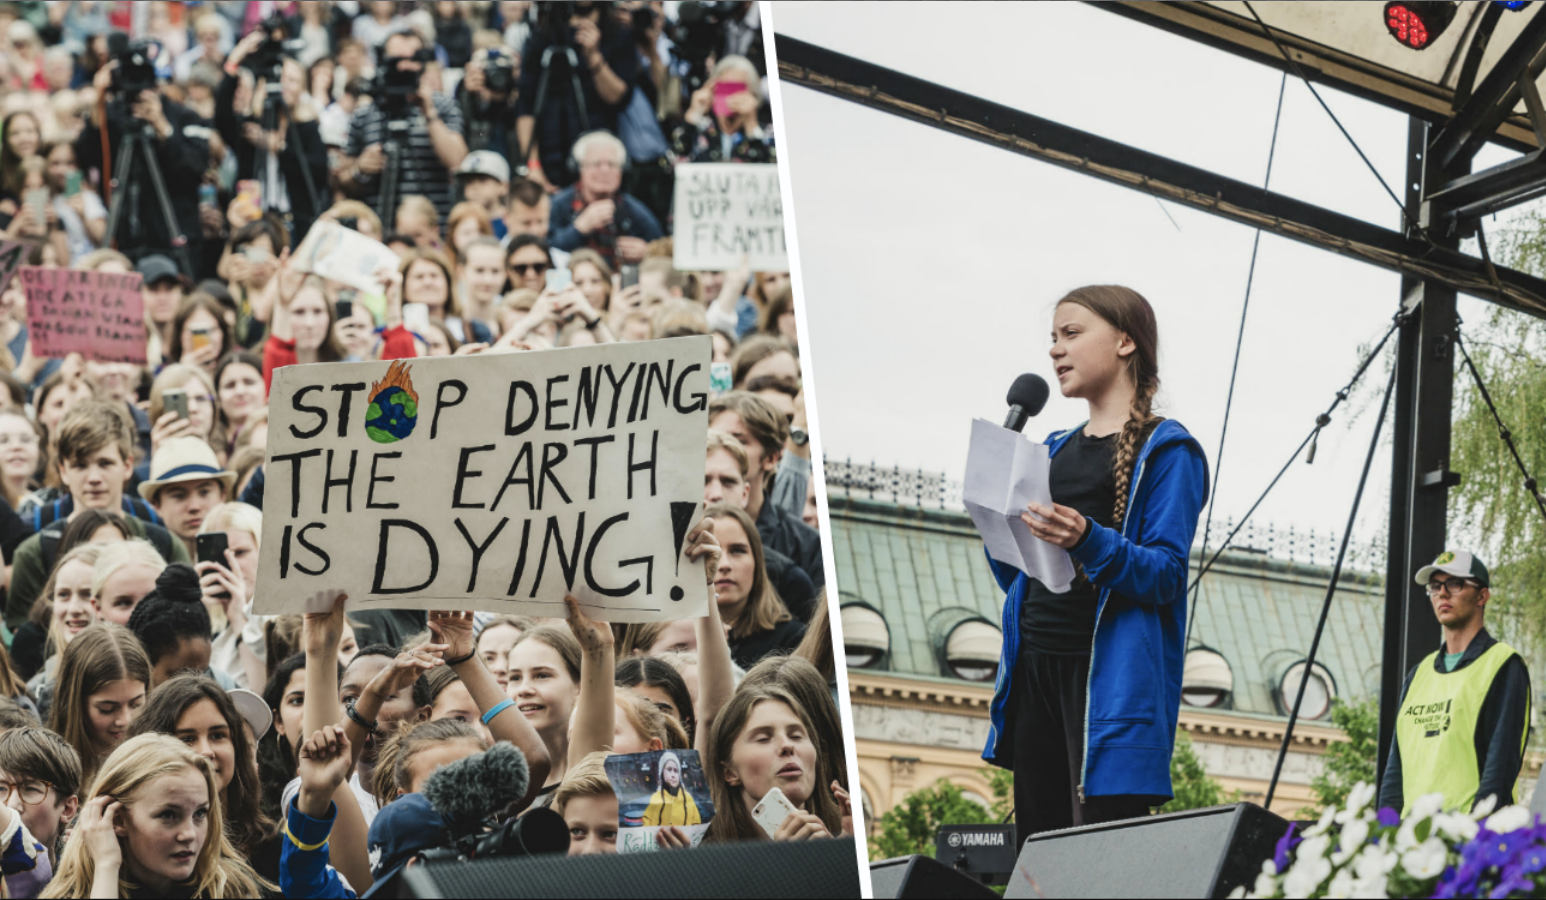 Klimat, Greta Thunberg